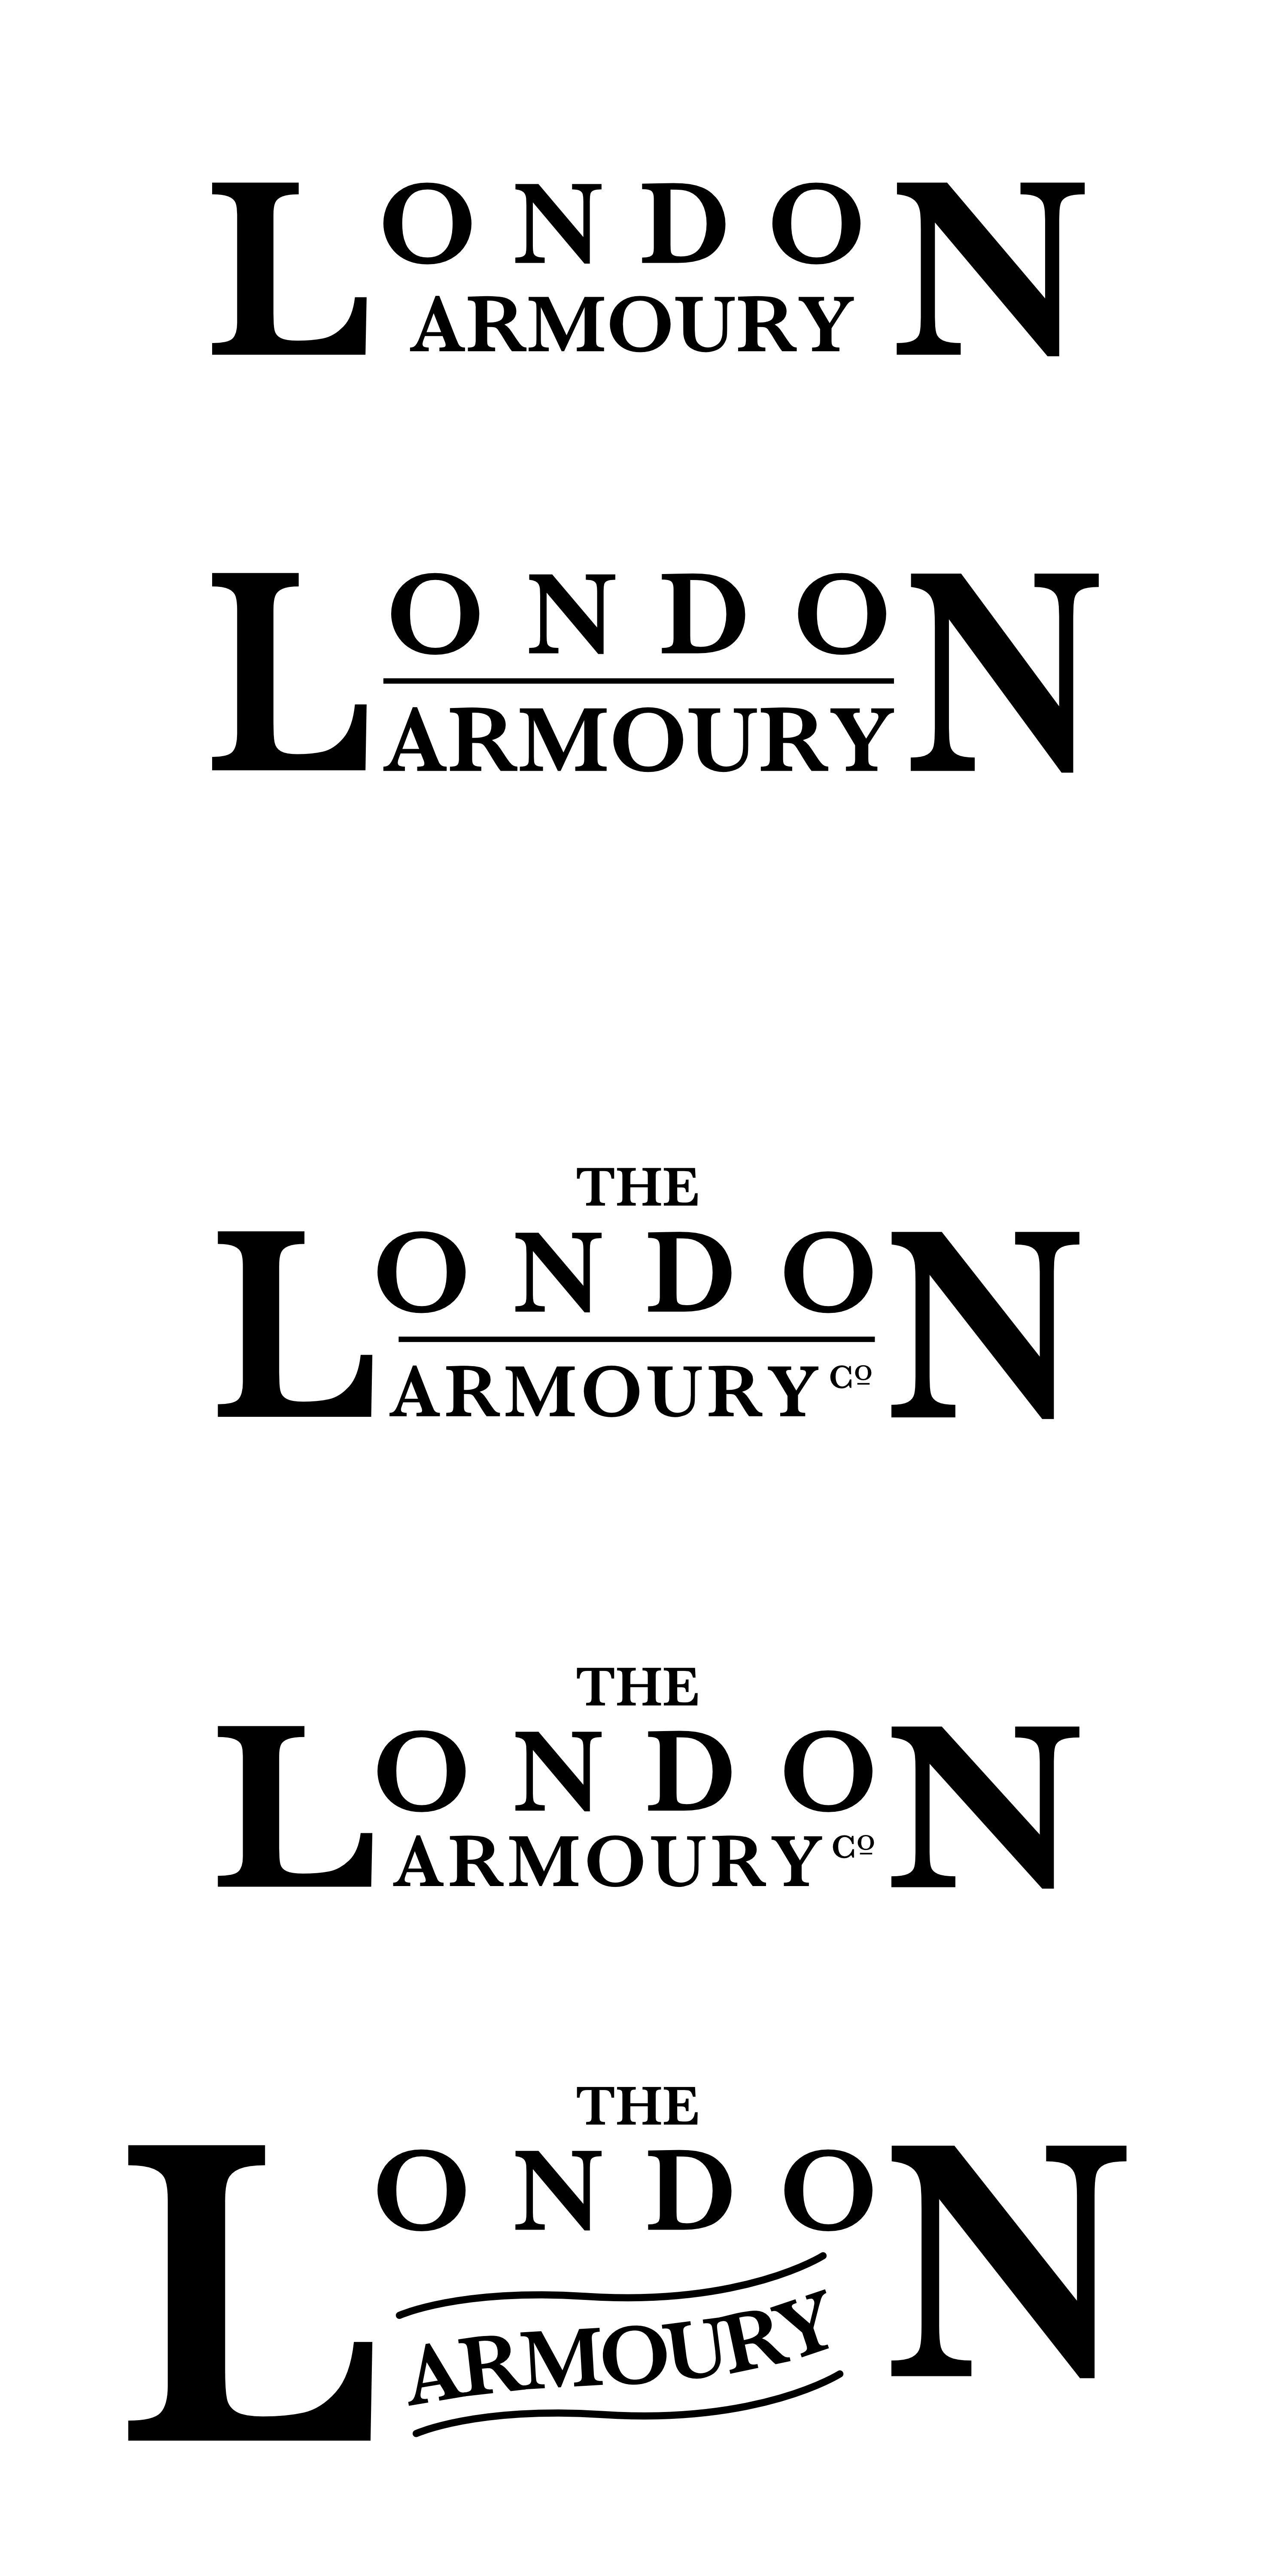 London Armoury Company logo concepts.